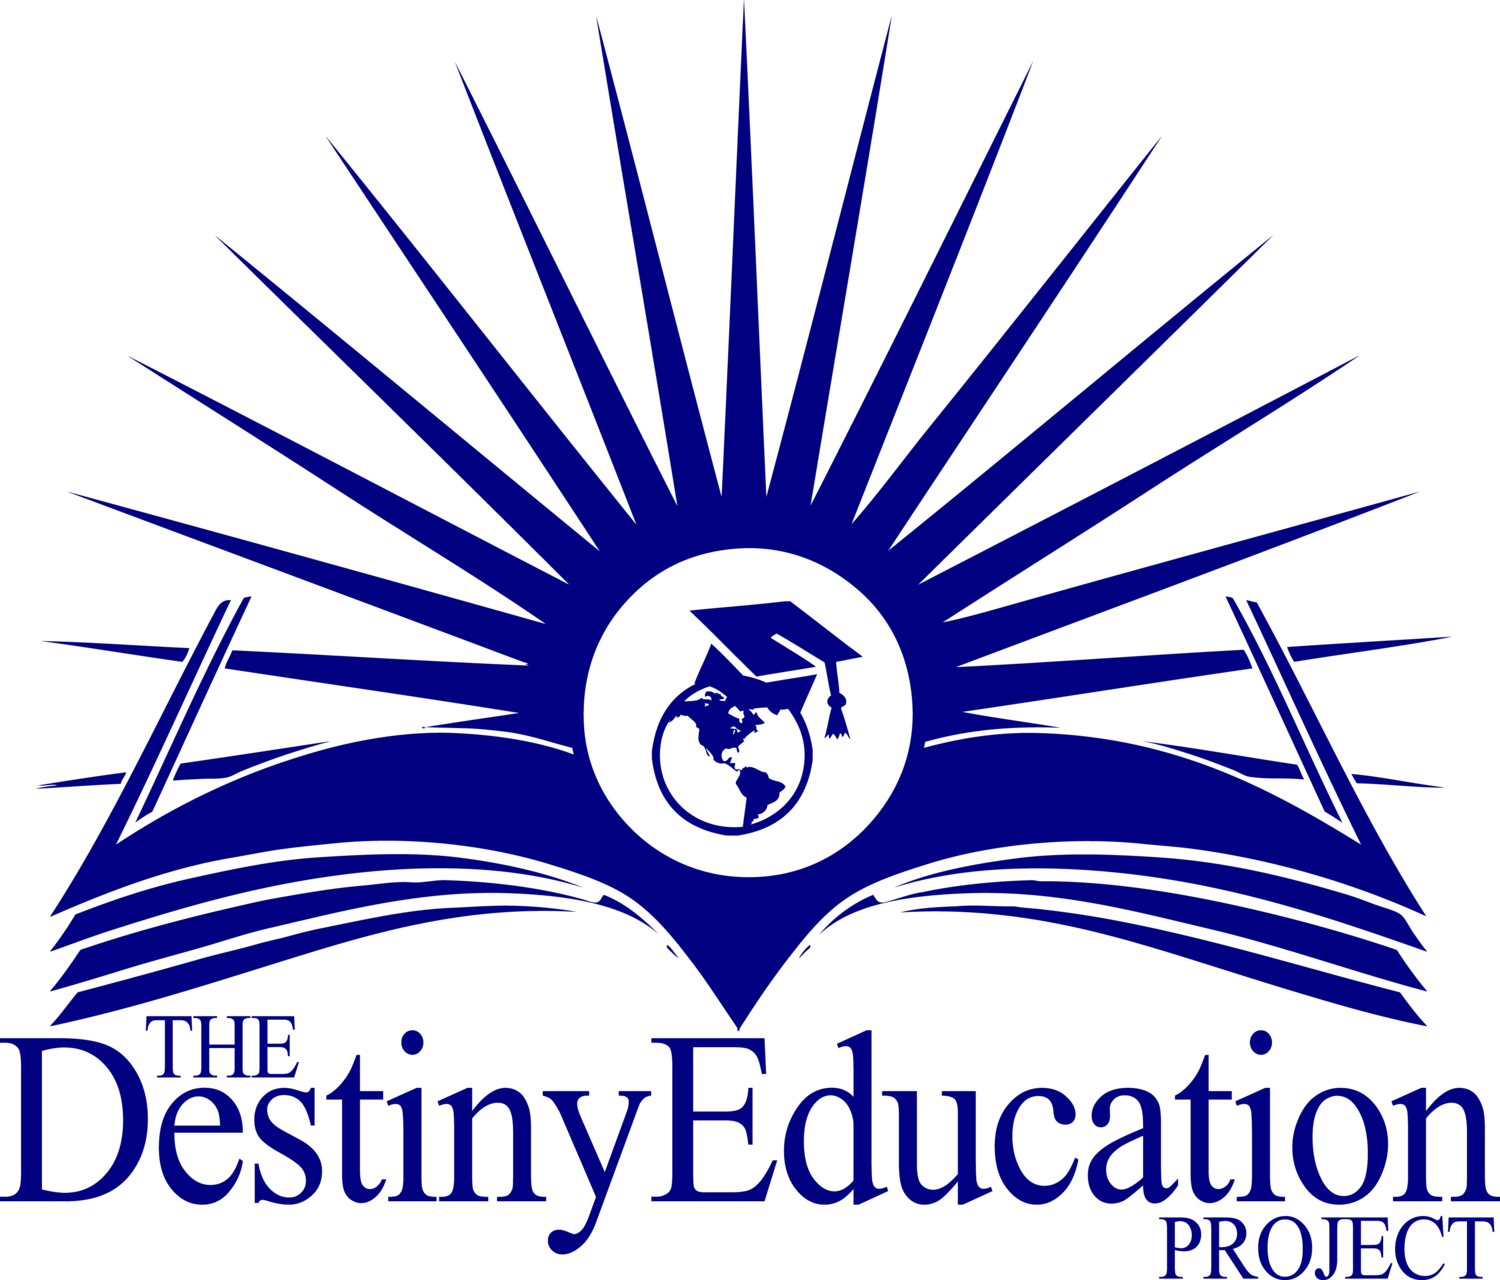 The Destiny Education Project